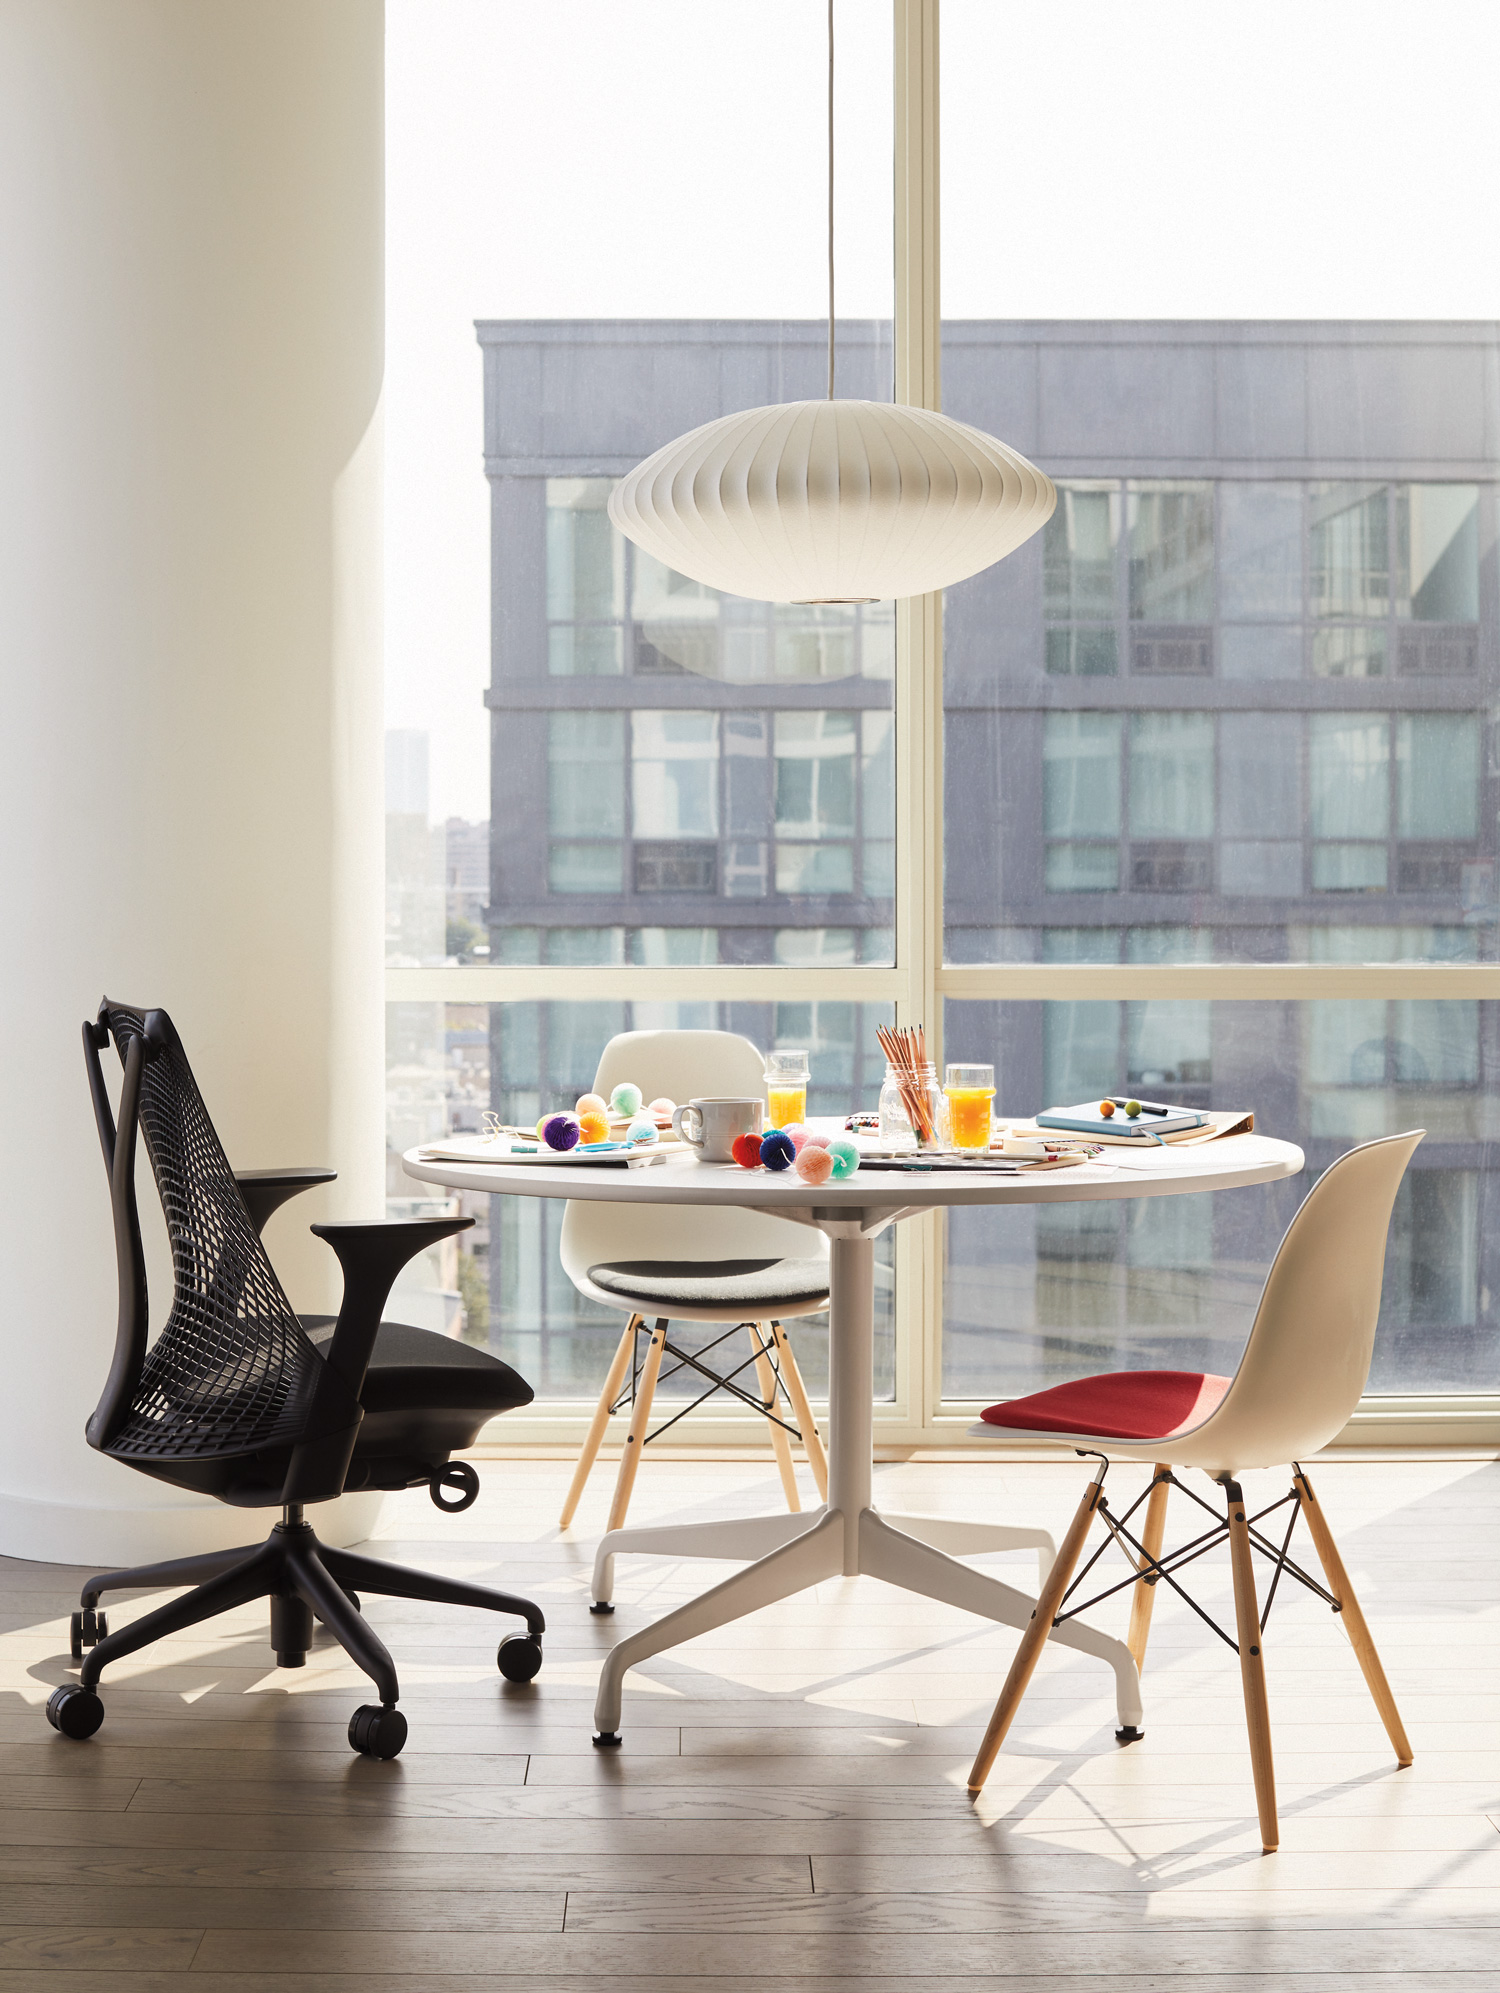 Herman Miller Sayl Basic Work Chair modernizes work spaces